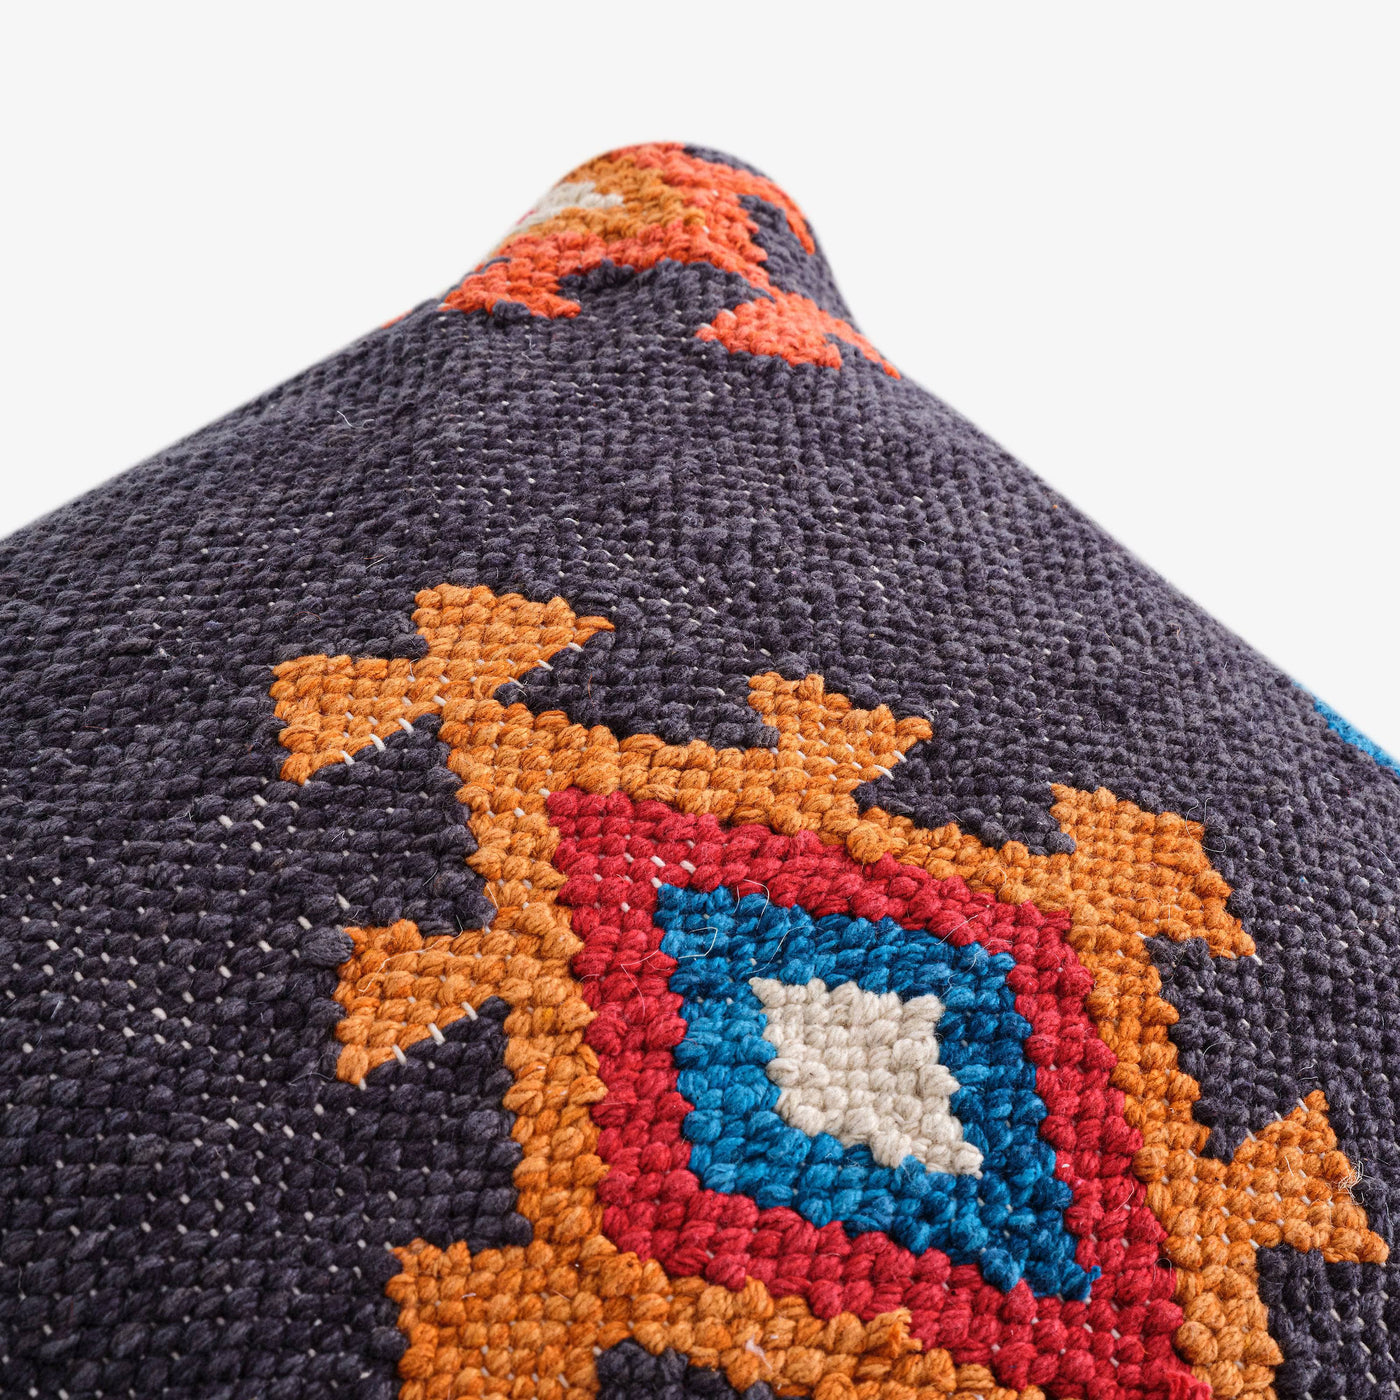 Dario Cushion, Multicoloured,45x45 cm Cushions sazy.com